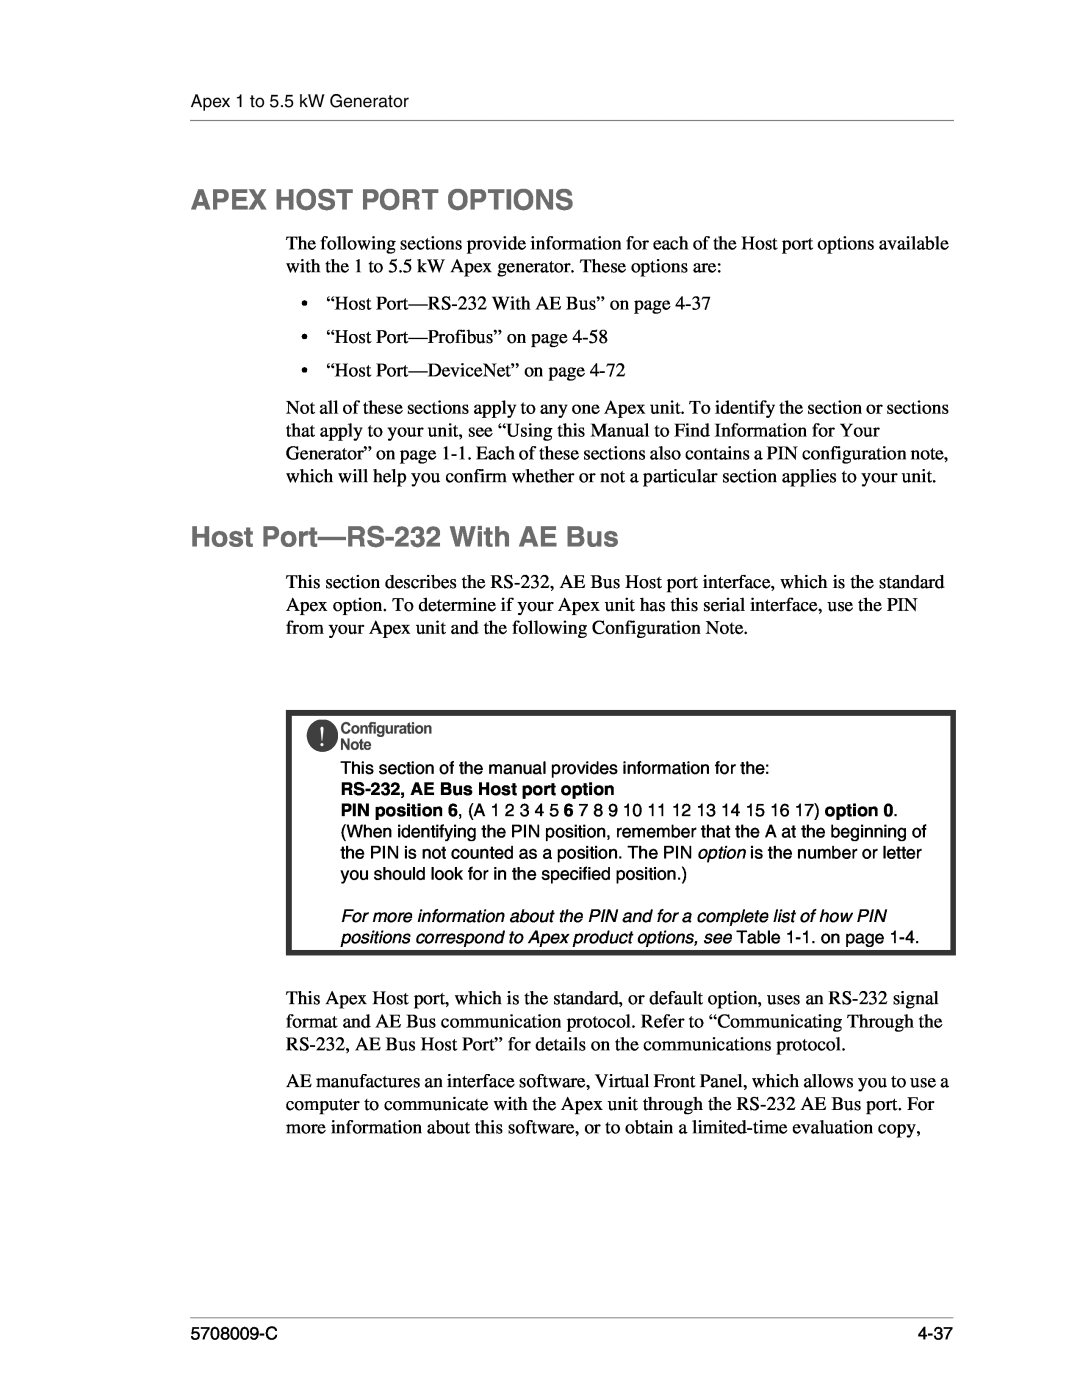 Apex Digital 5708009-C manual Apex Host Port Options, Host Port-RS-232 With AE Bus, RS-232, AE Bus Host port option 